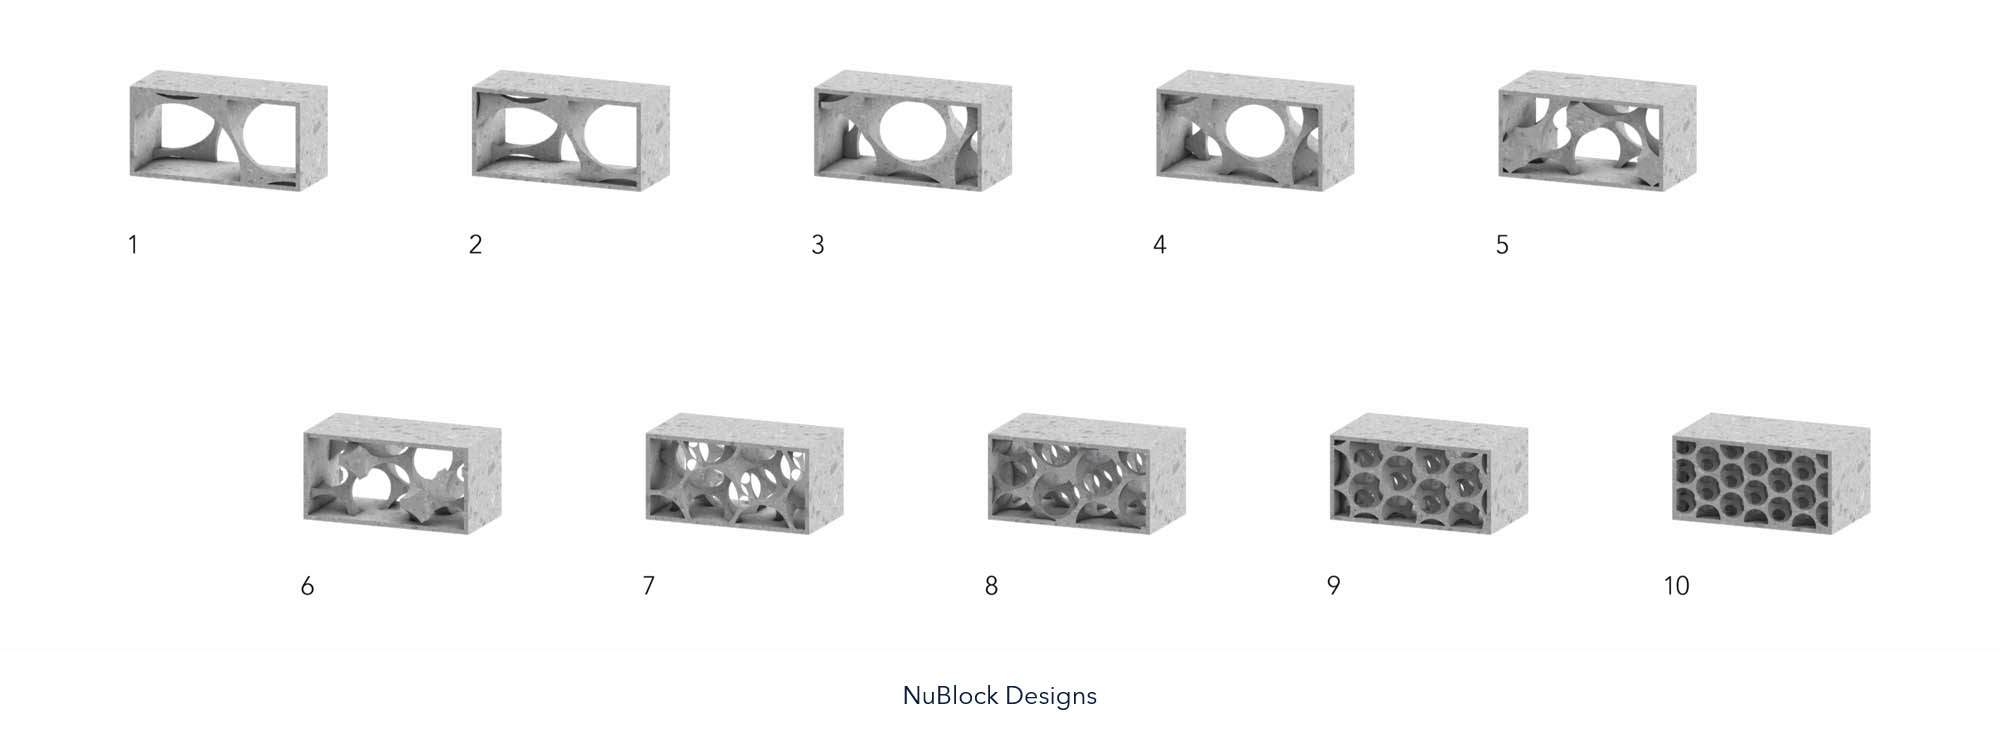 Different Types of NuBlock Designs